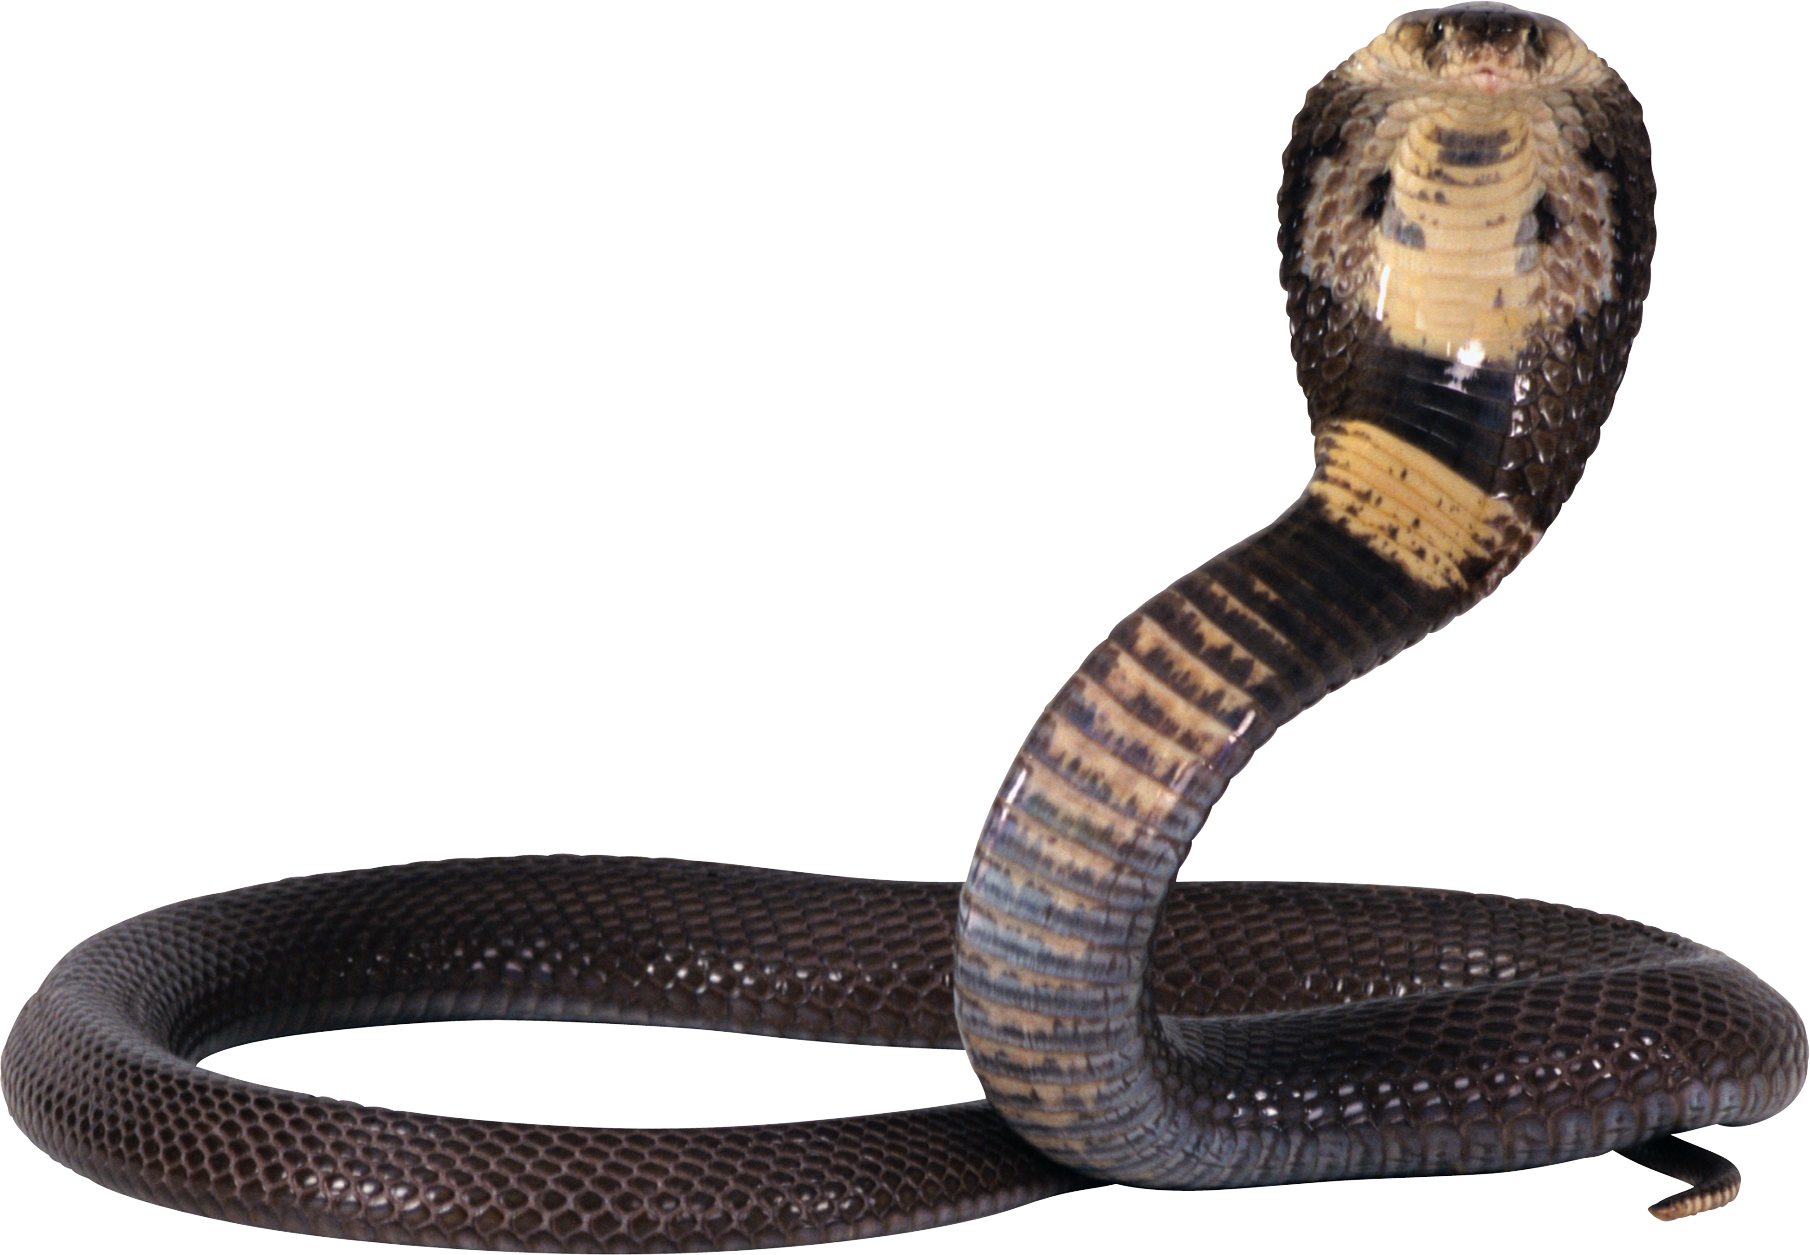 Cobra Snake Png Image PNG Ima